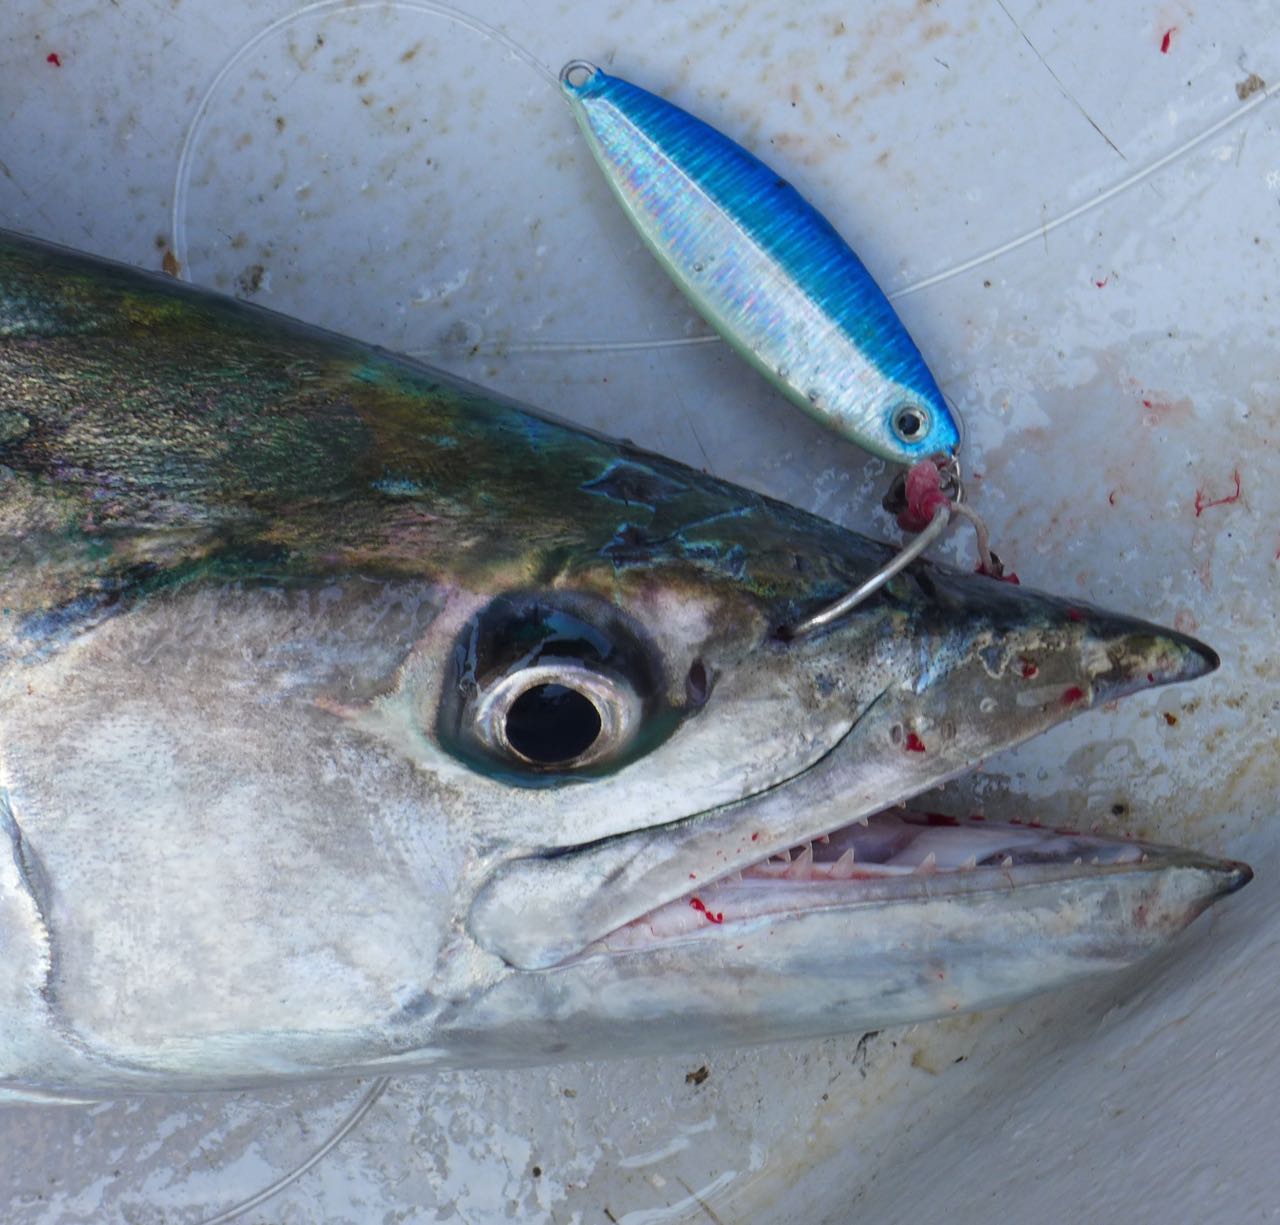  Narrow-barred Spanish Mackerel caught on jig